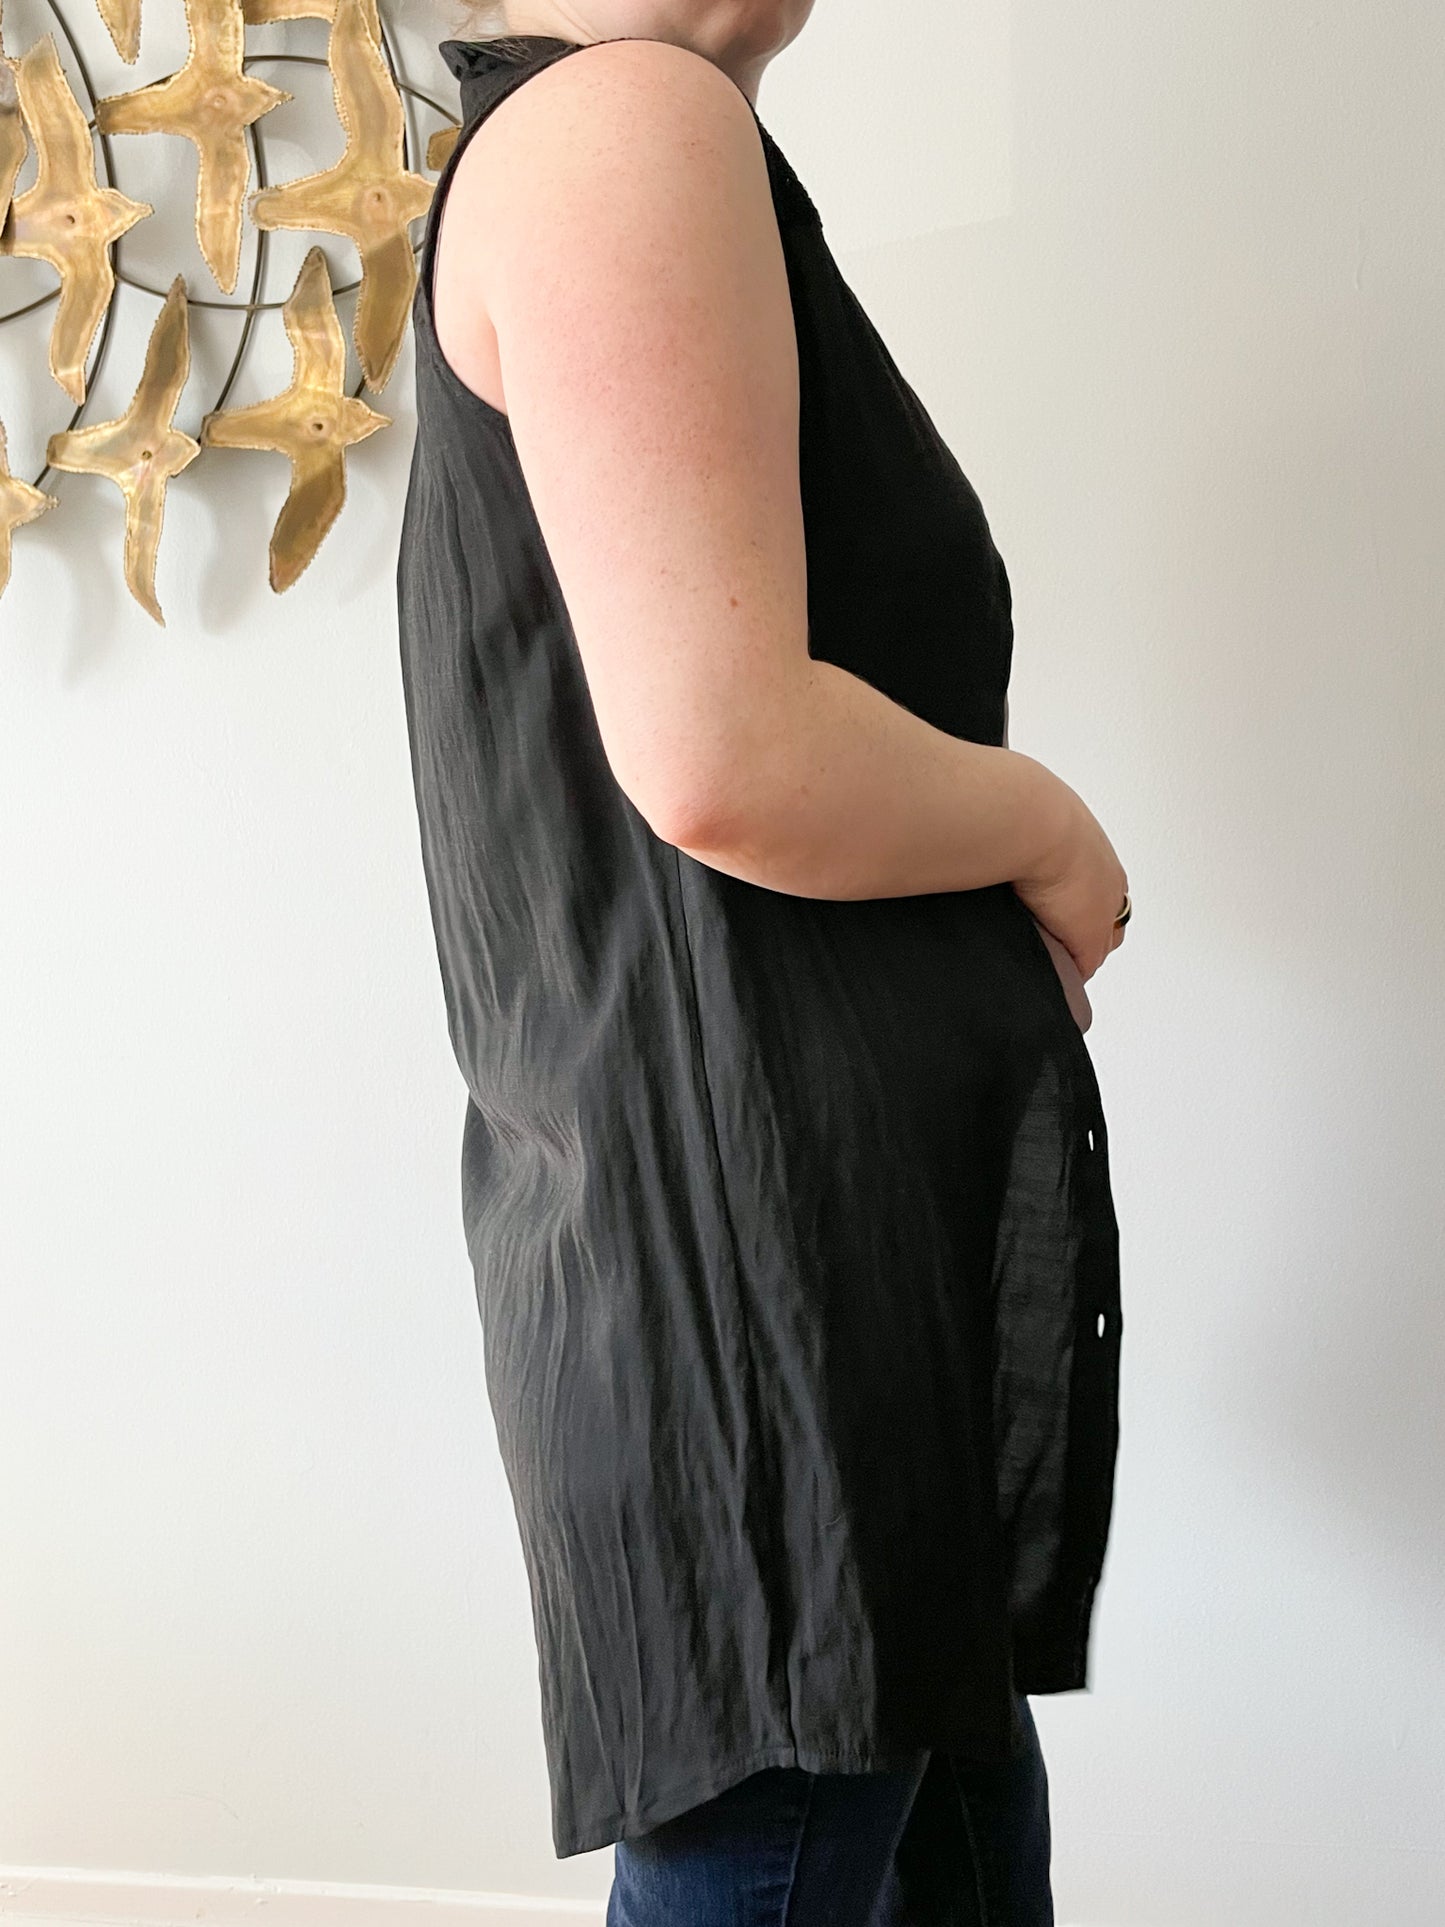 Lilibleu Black Button Down Front Sleeveless Dress / Coverup / Vest - Small